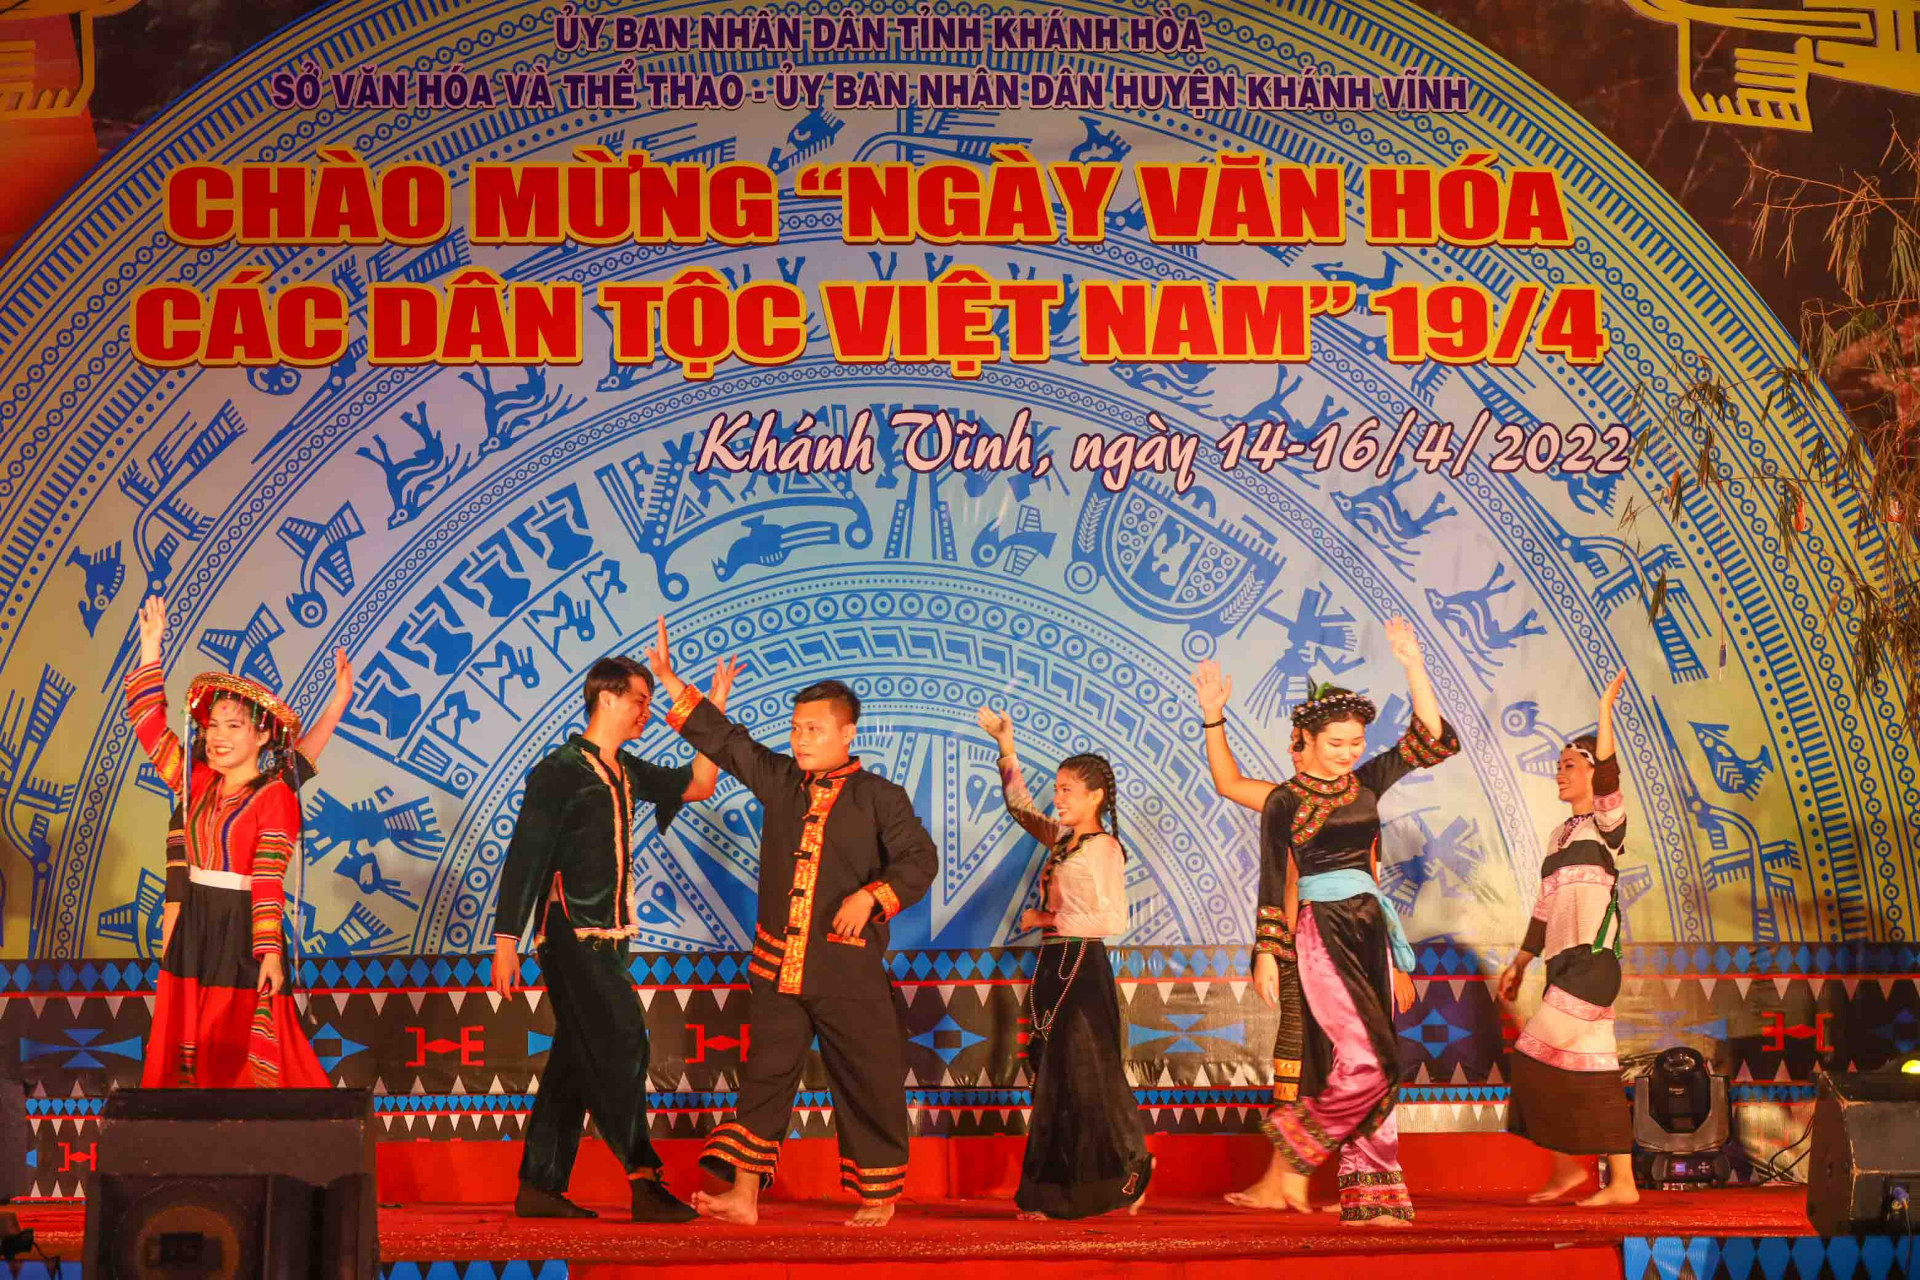 Fashion performance of Ninh Hoa Town